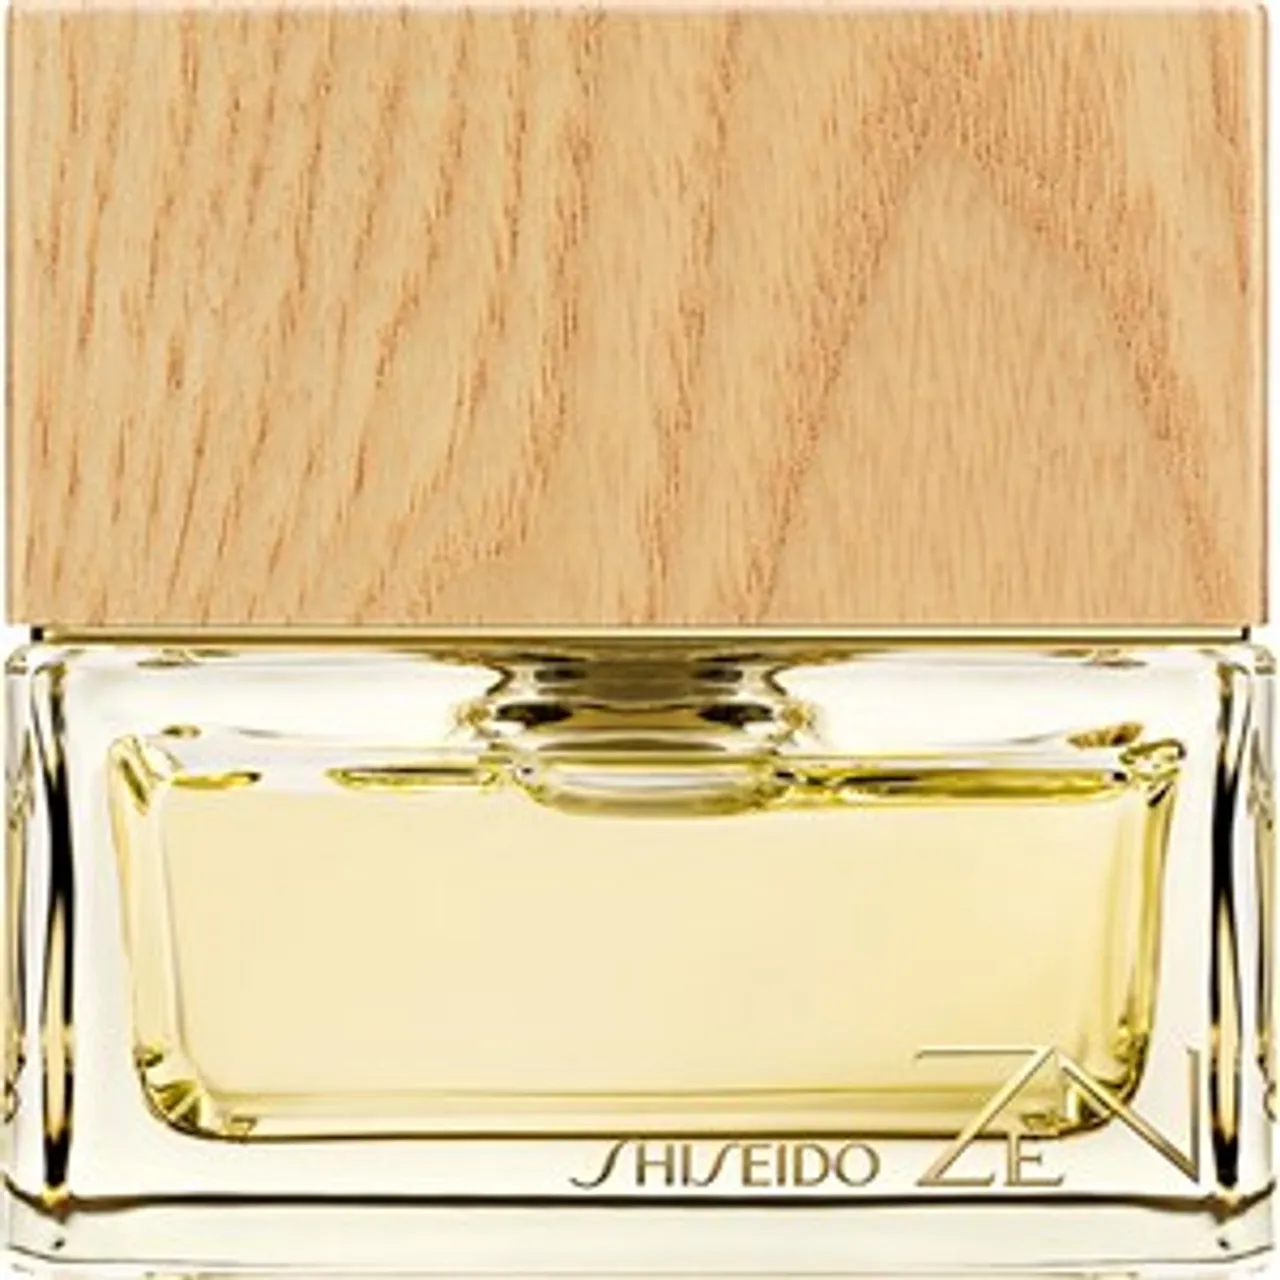 Shiseido Eau de Parfum Spray Female 100 ml